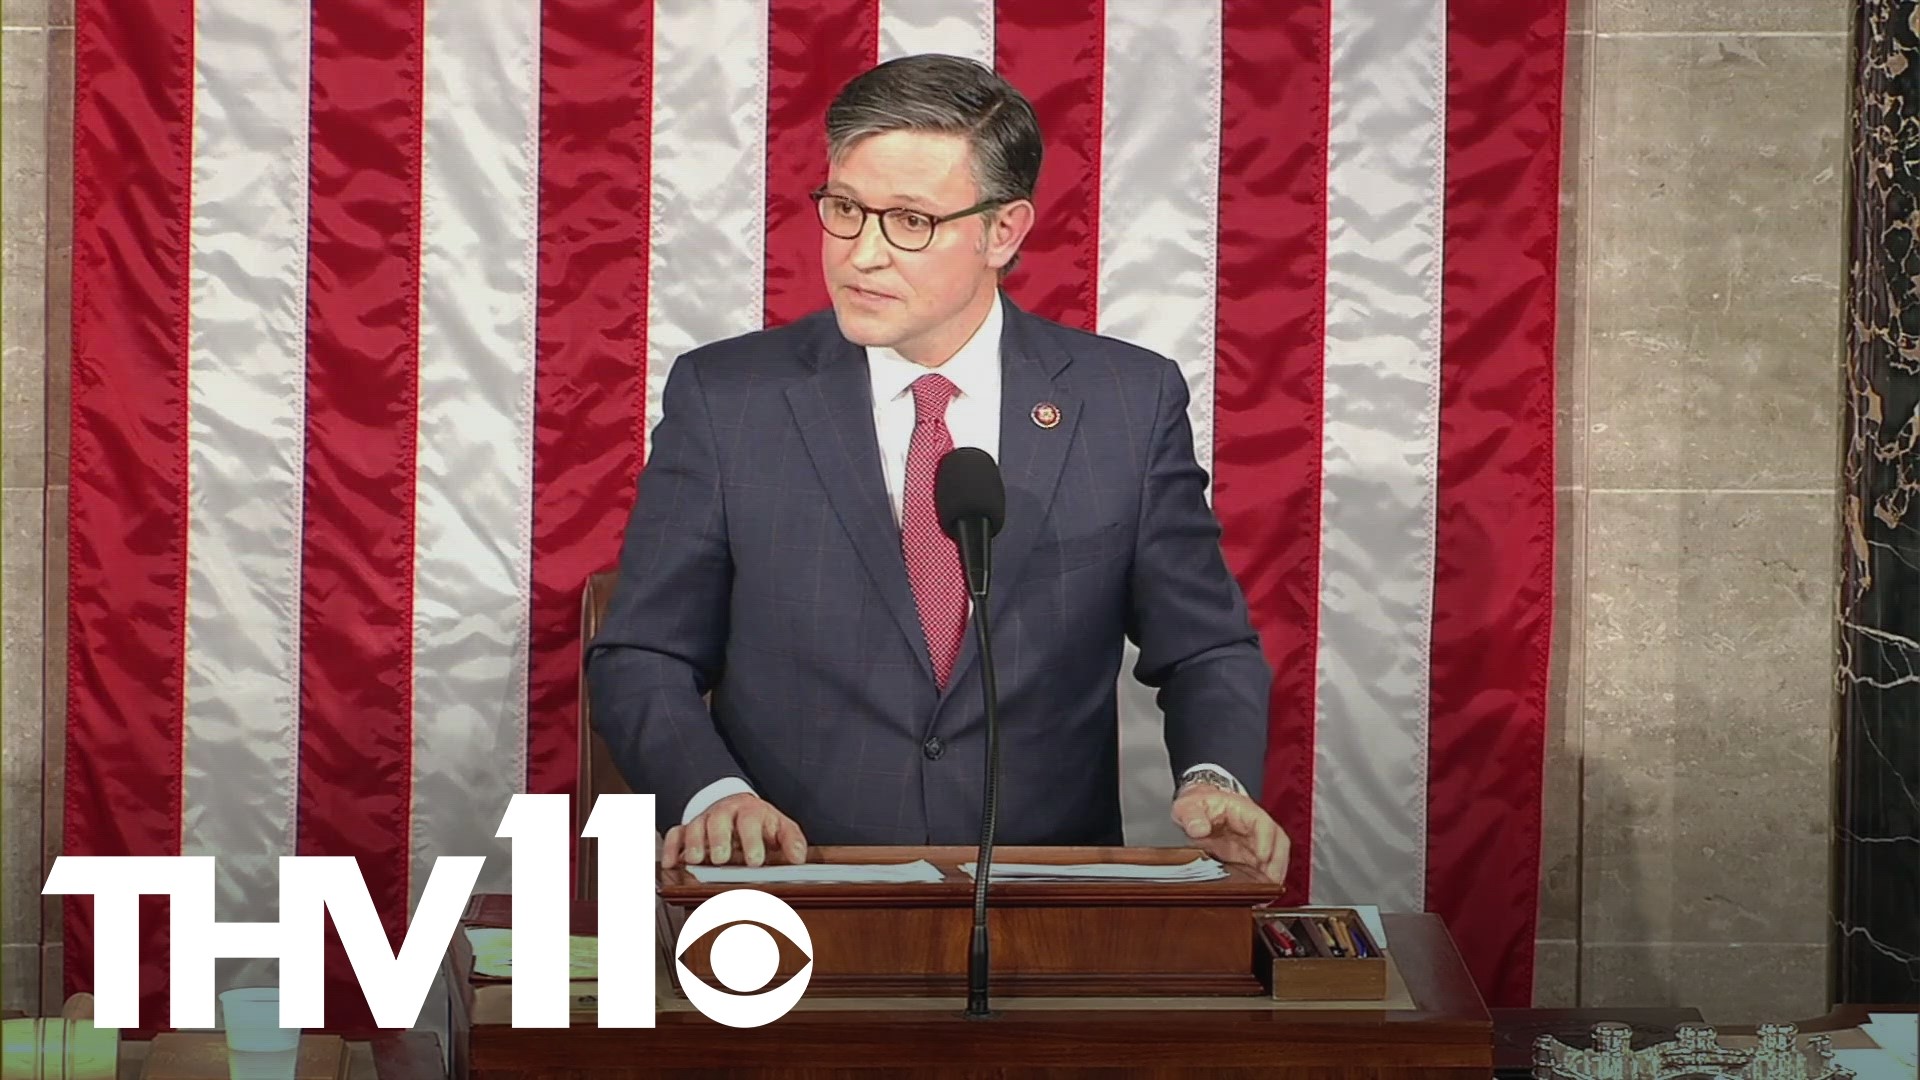 Republican Mike Johnson elected US House speaker, ending